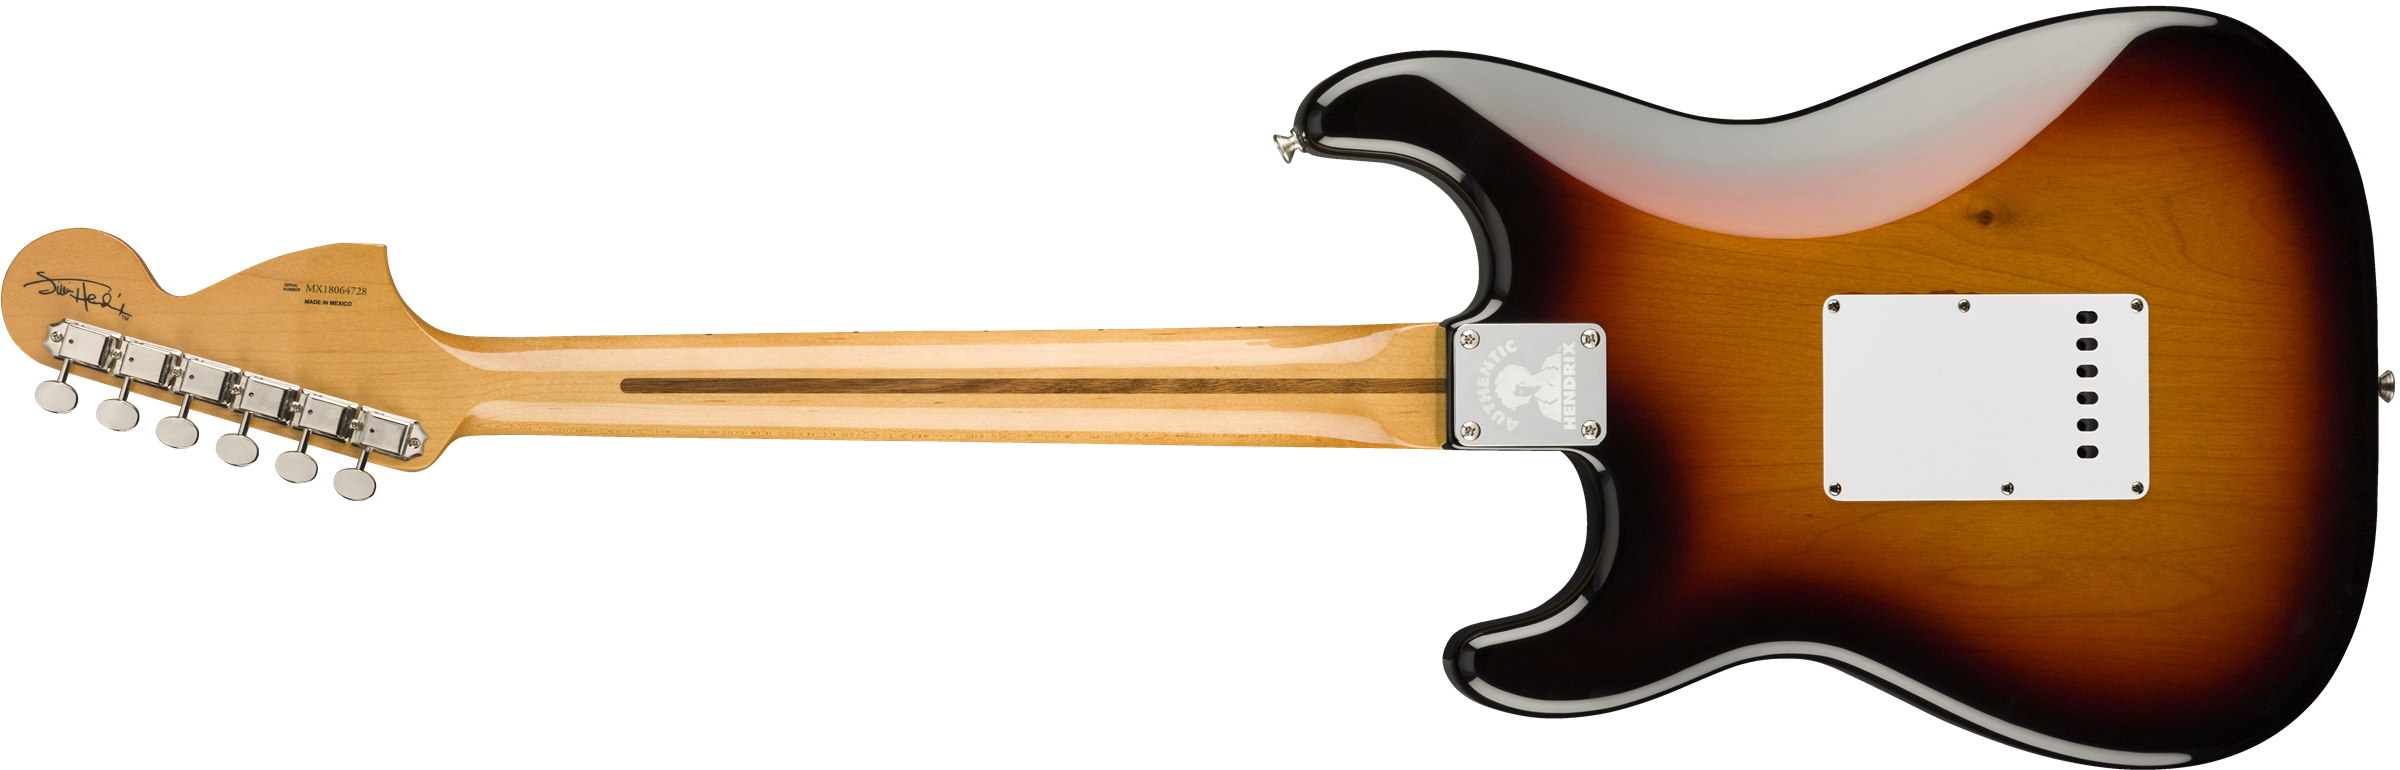 Fender Jimi Hendrix Strat Signature 2018 Mn - 3-color Sunburst - Str shape electric guitar - Variation 1